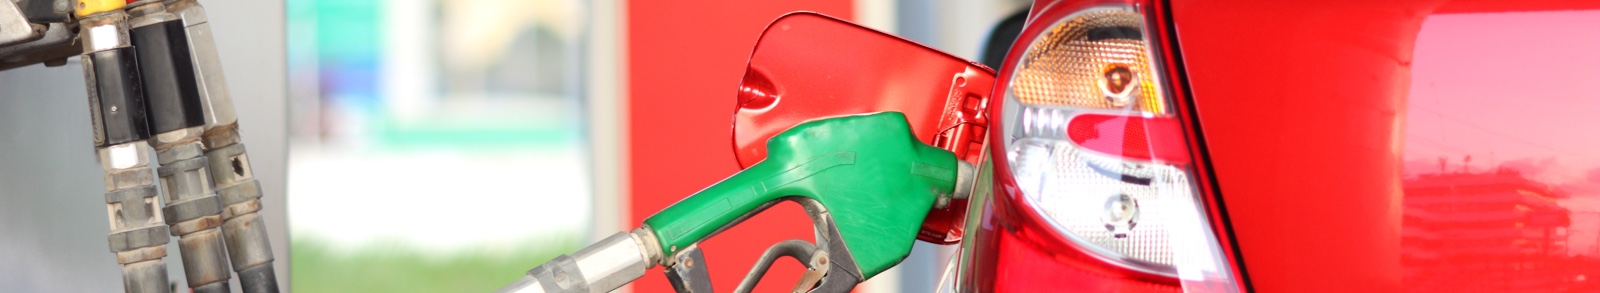 Green petrol pump inside a red car